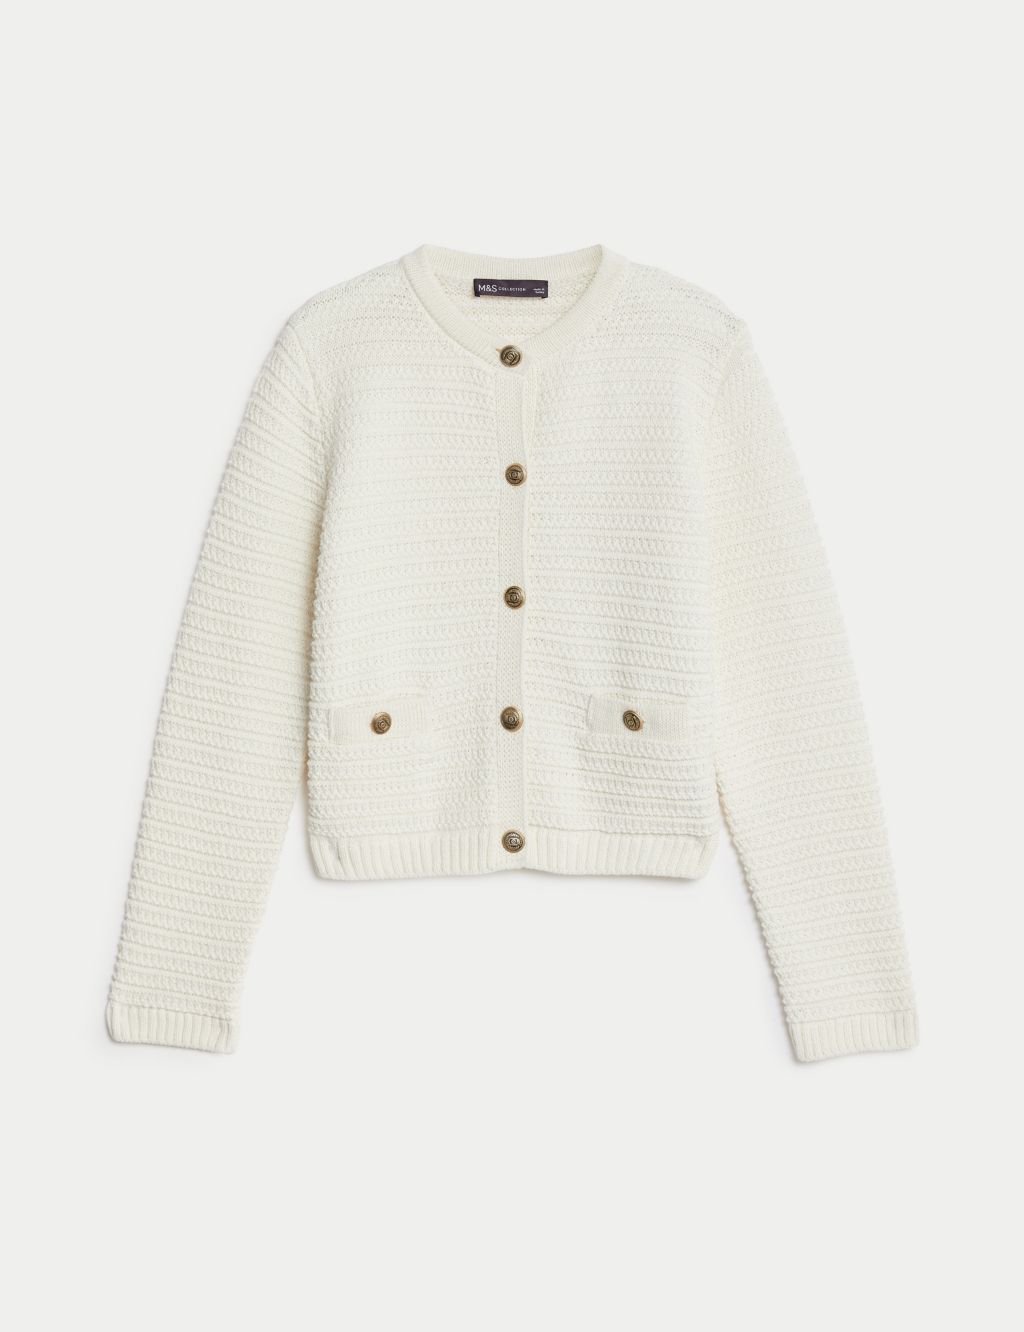 H&M texture classic black white Knit Cardigan sweater &